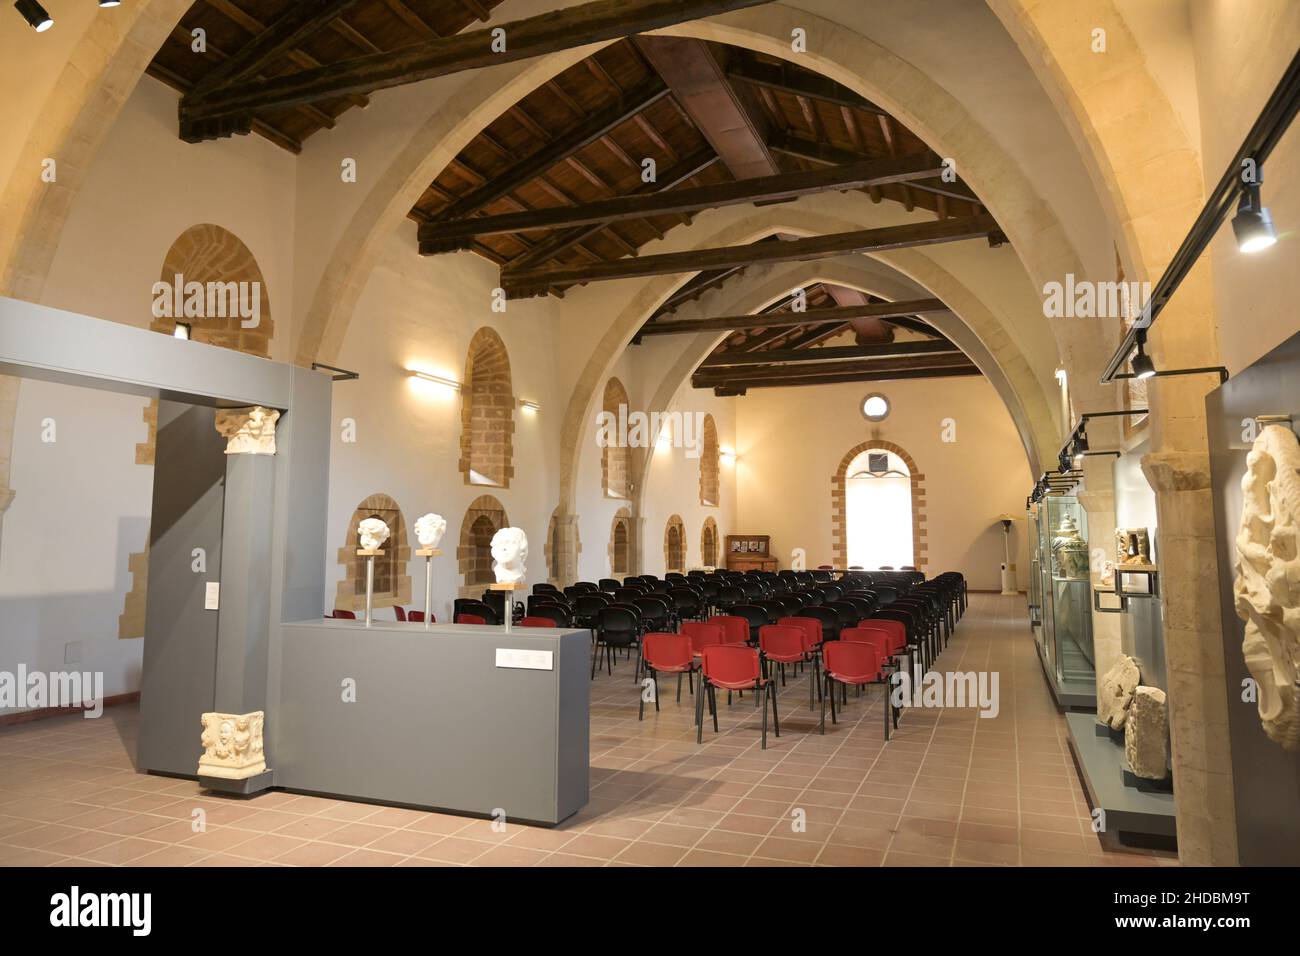 Ehemaliges Dormitorium (Schlafsaal), Festsaal, Zisterzienserkloster 'Monache cistercensi santo spirito', Agrigent, Sizilien, Italien Stockfoto